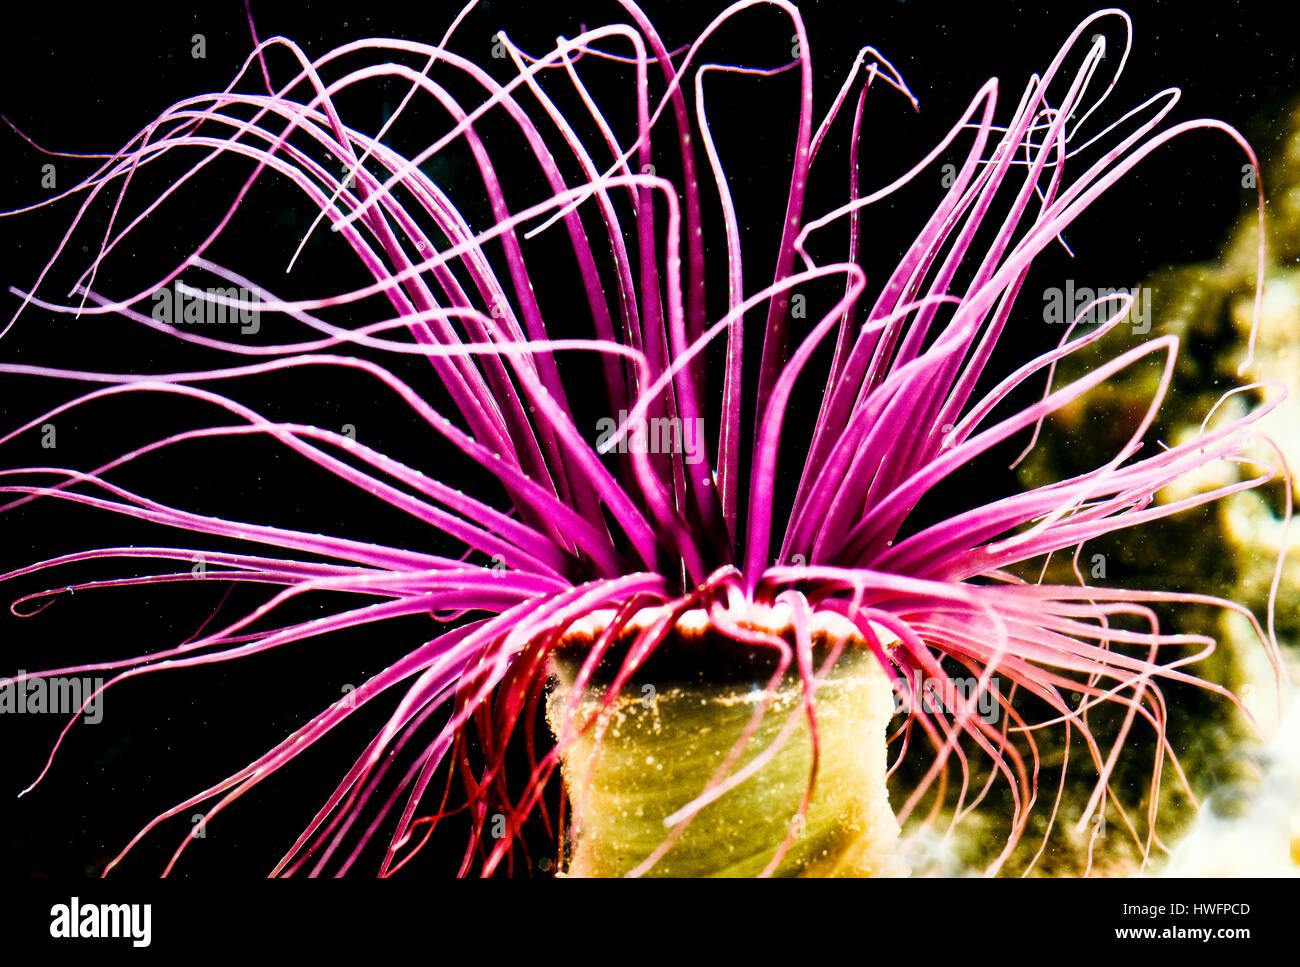 Tube Anemone - Cerianthus sp. Stock Photo